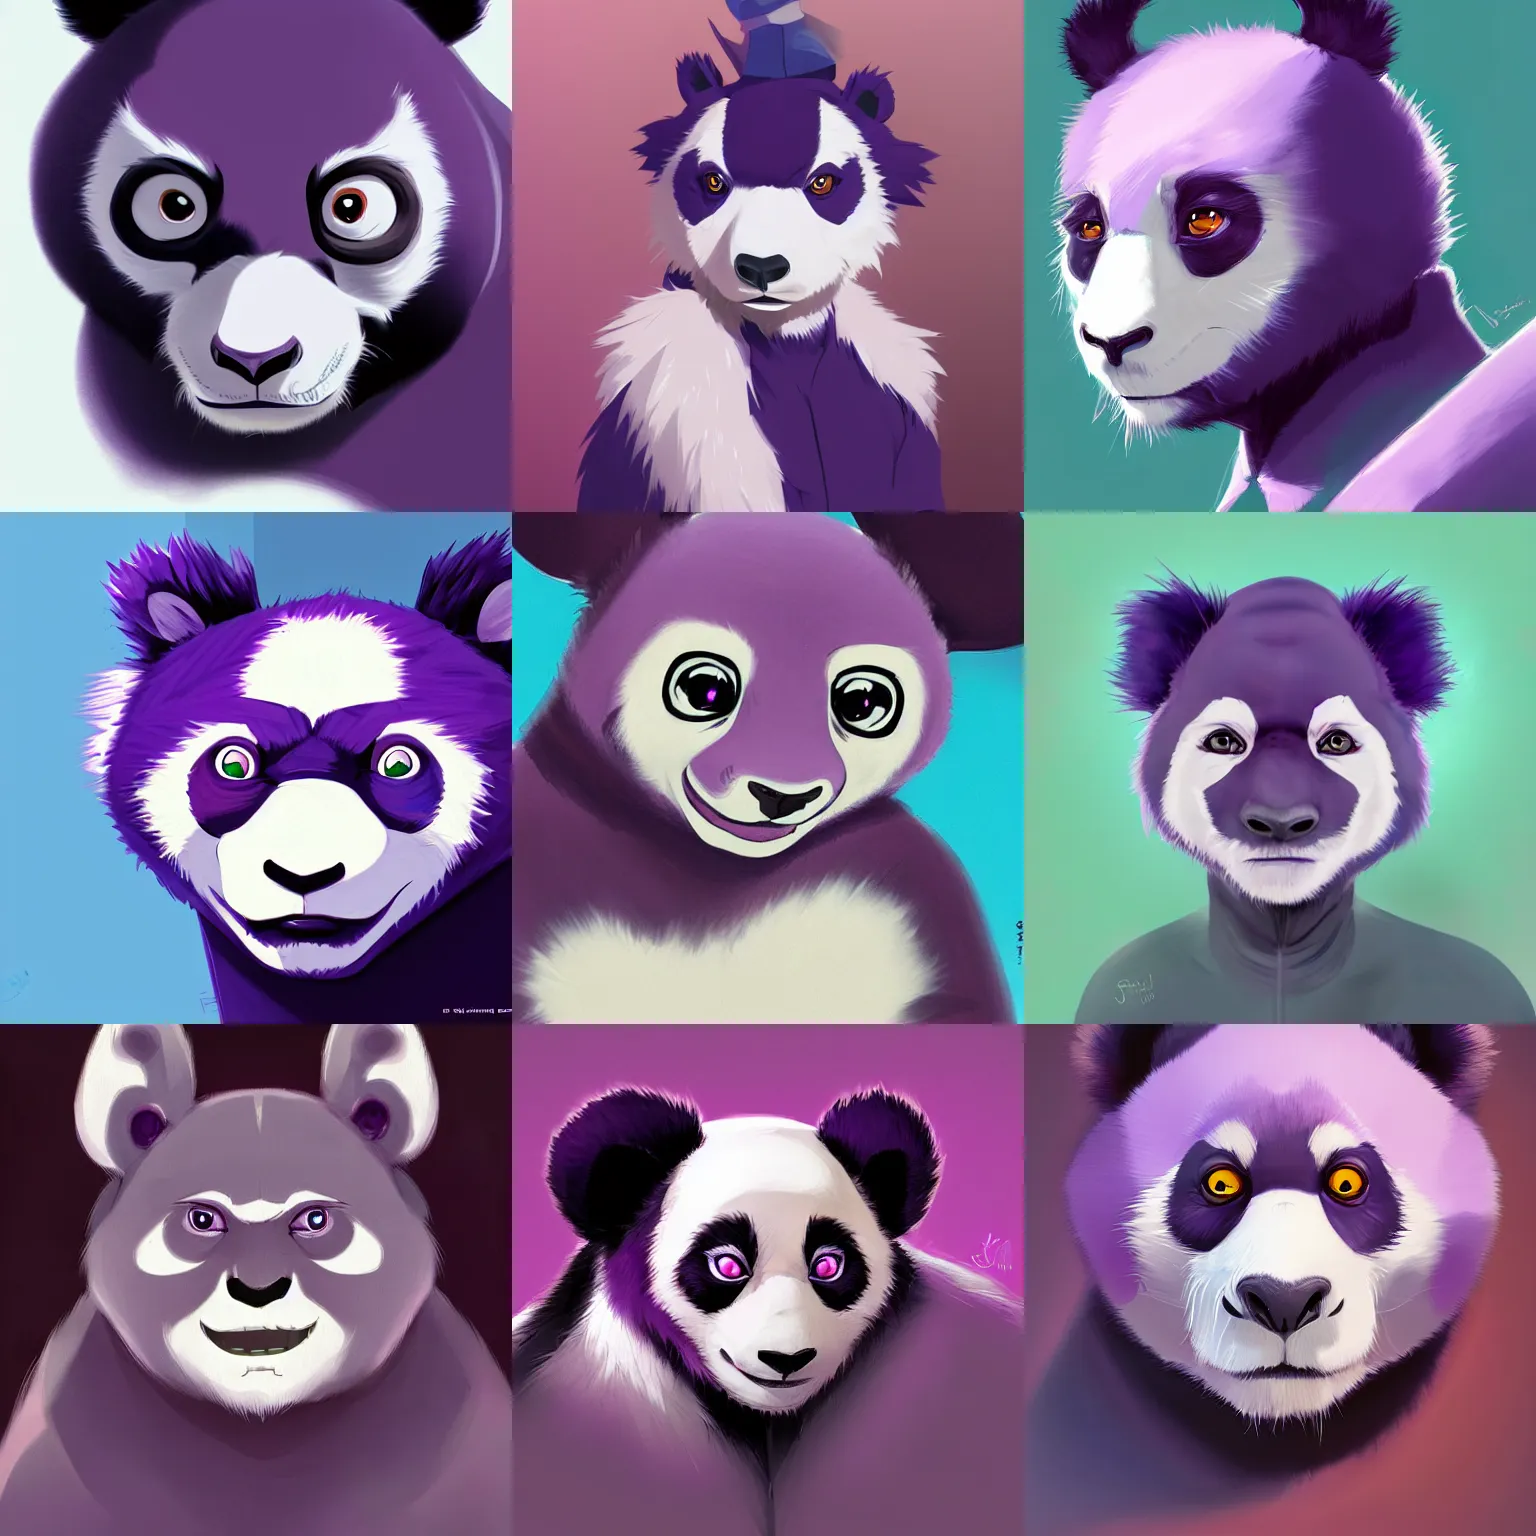 Prompt: character concept portrait, purple panda, digital painting, concept art, smooth, sharp focus, illustration by studio ghibli